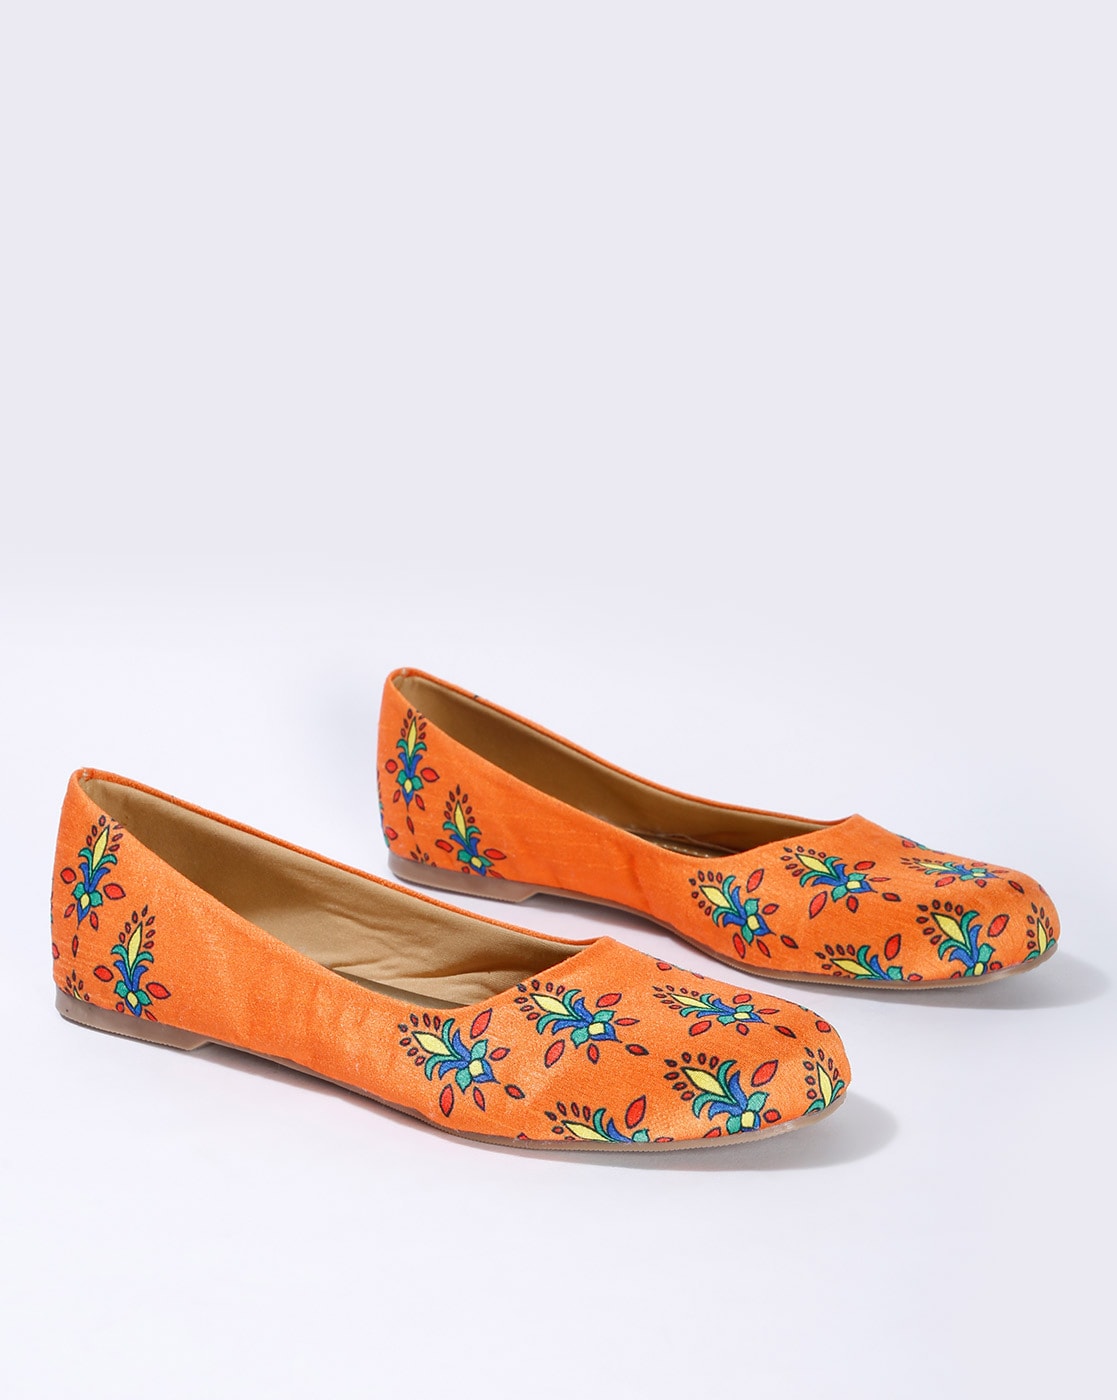 orange flat shoes ladies